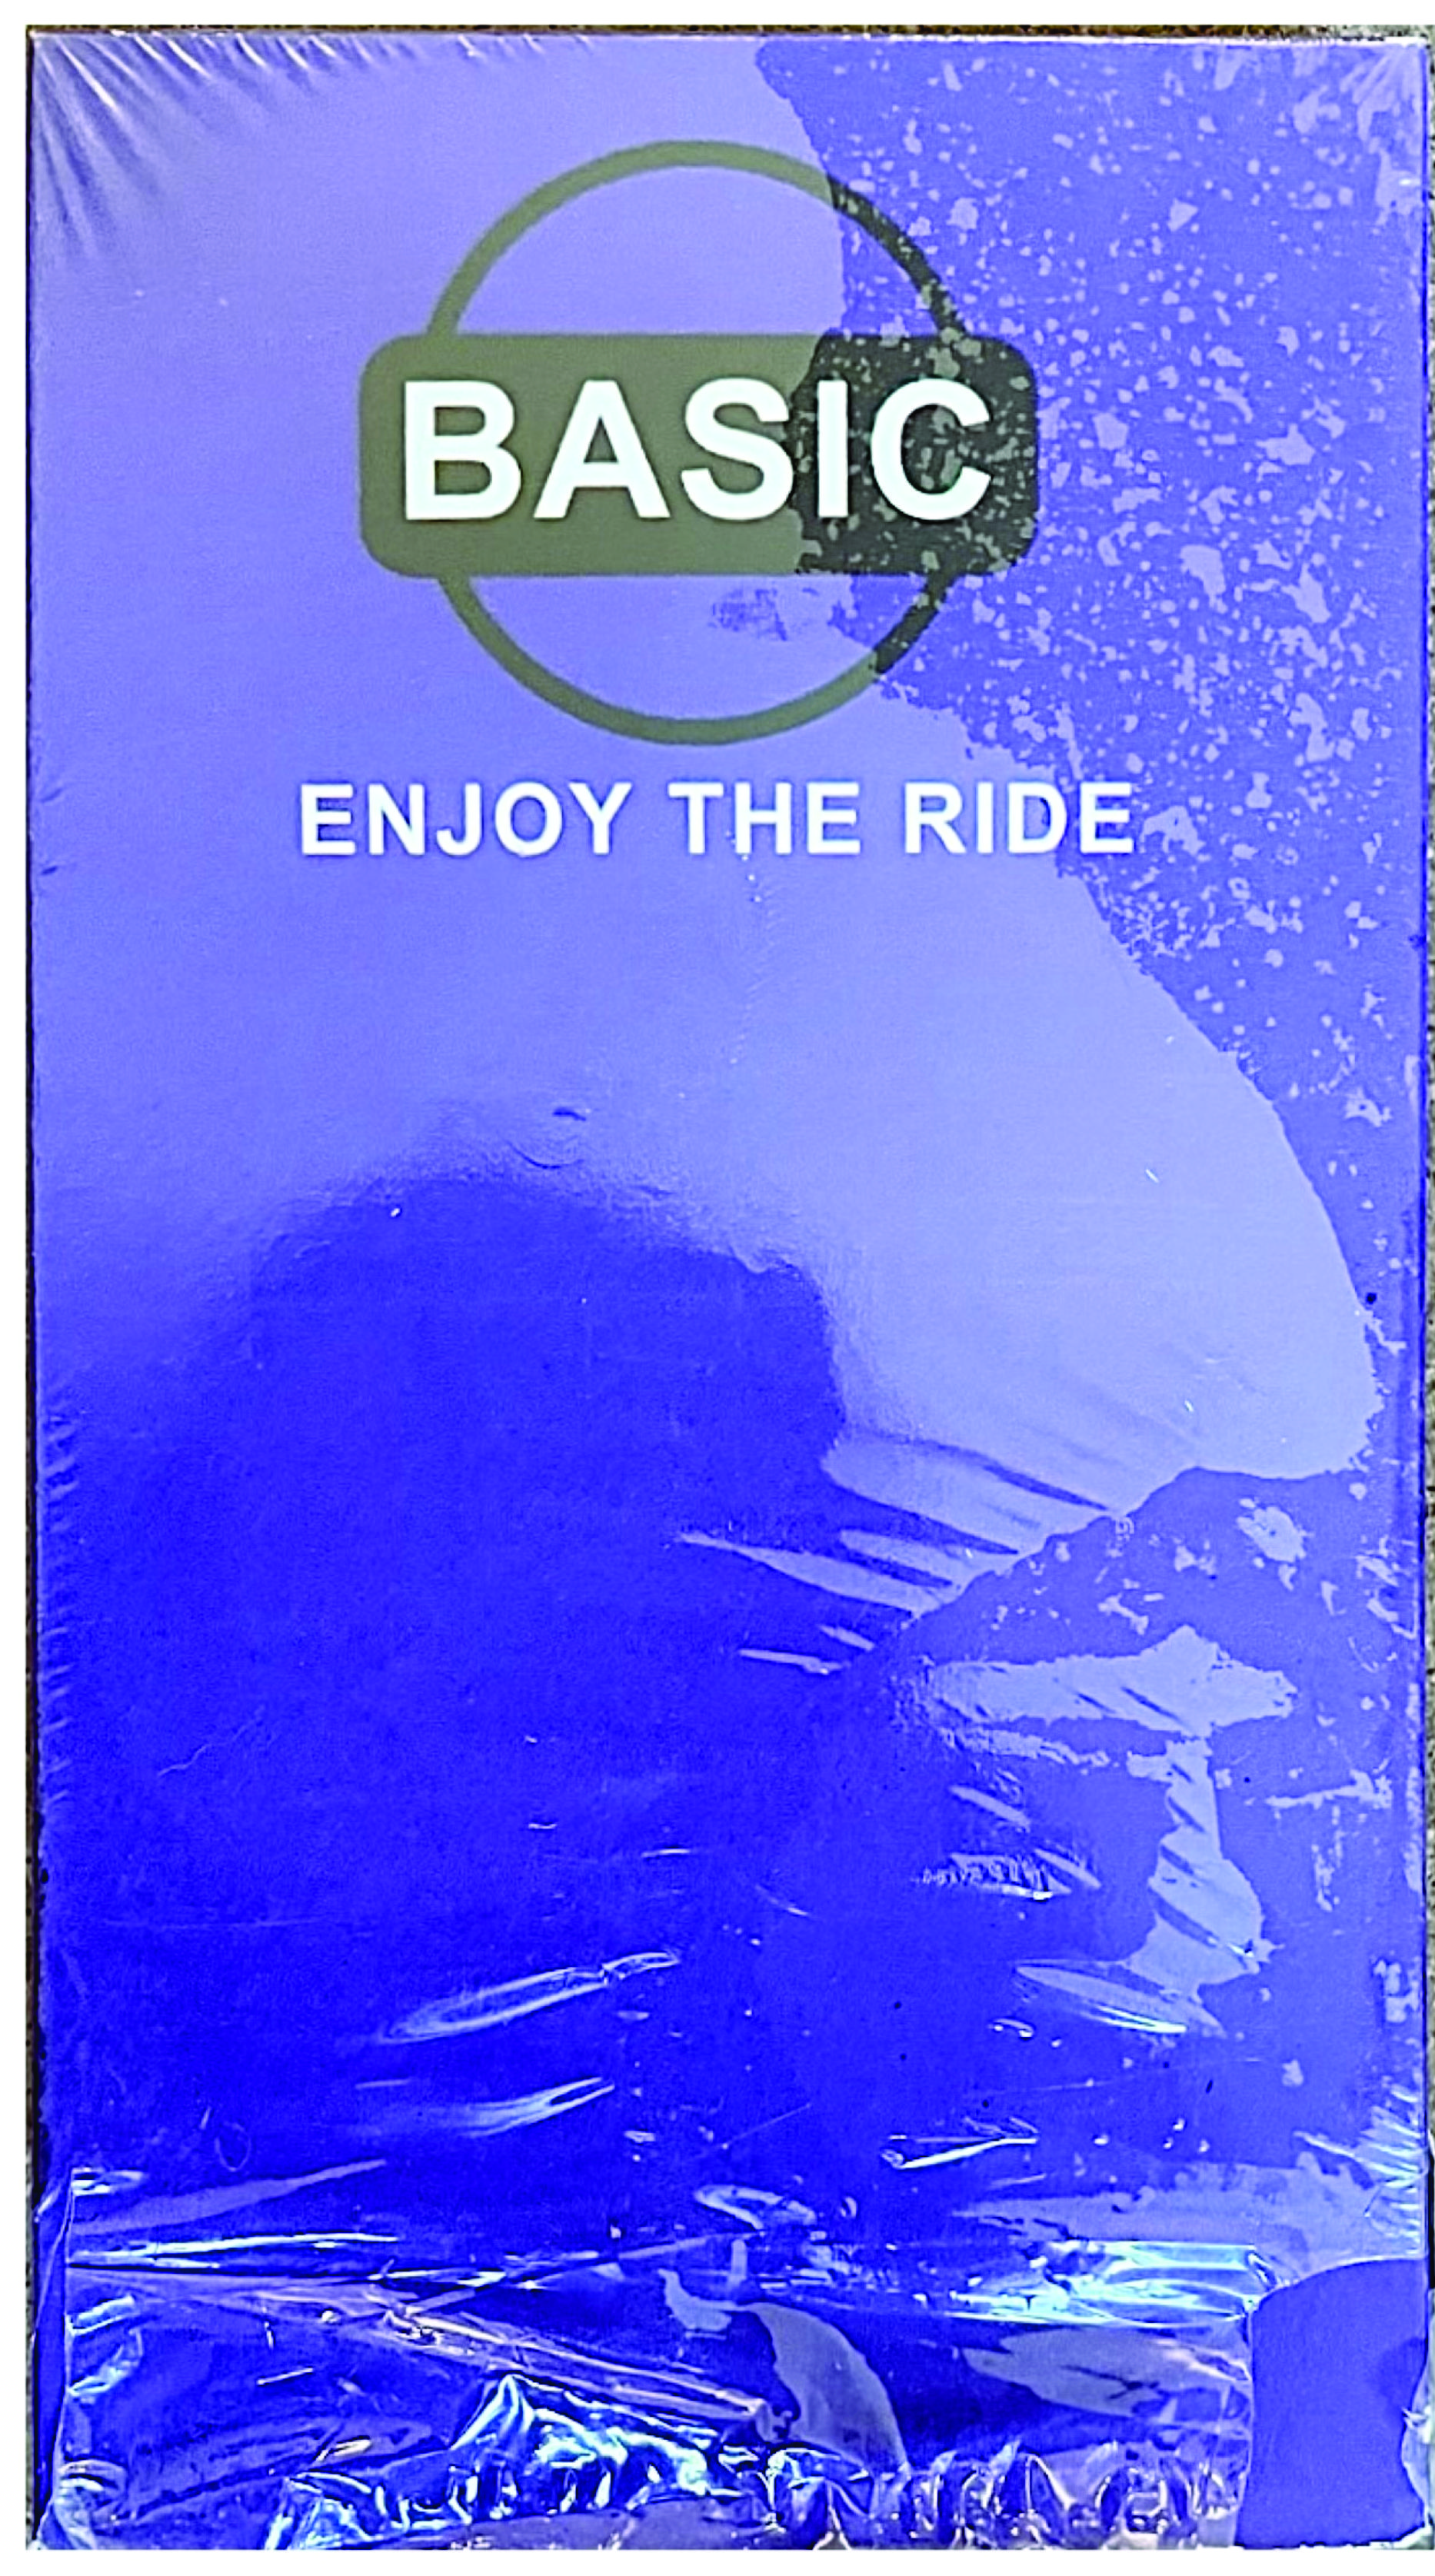 Basic - Enjoy The Ride cover art